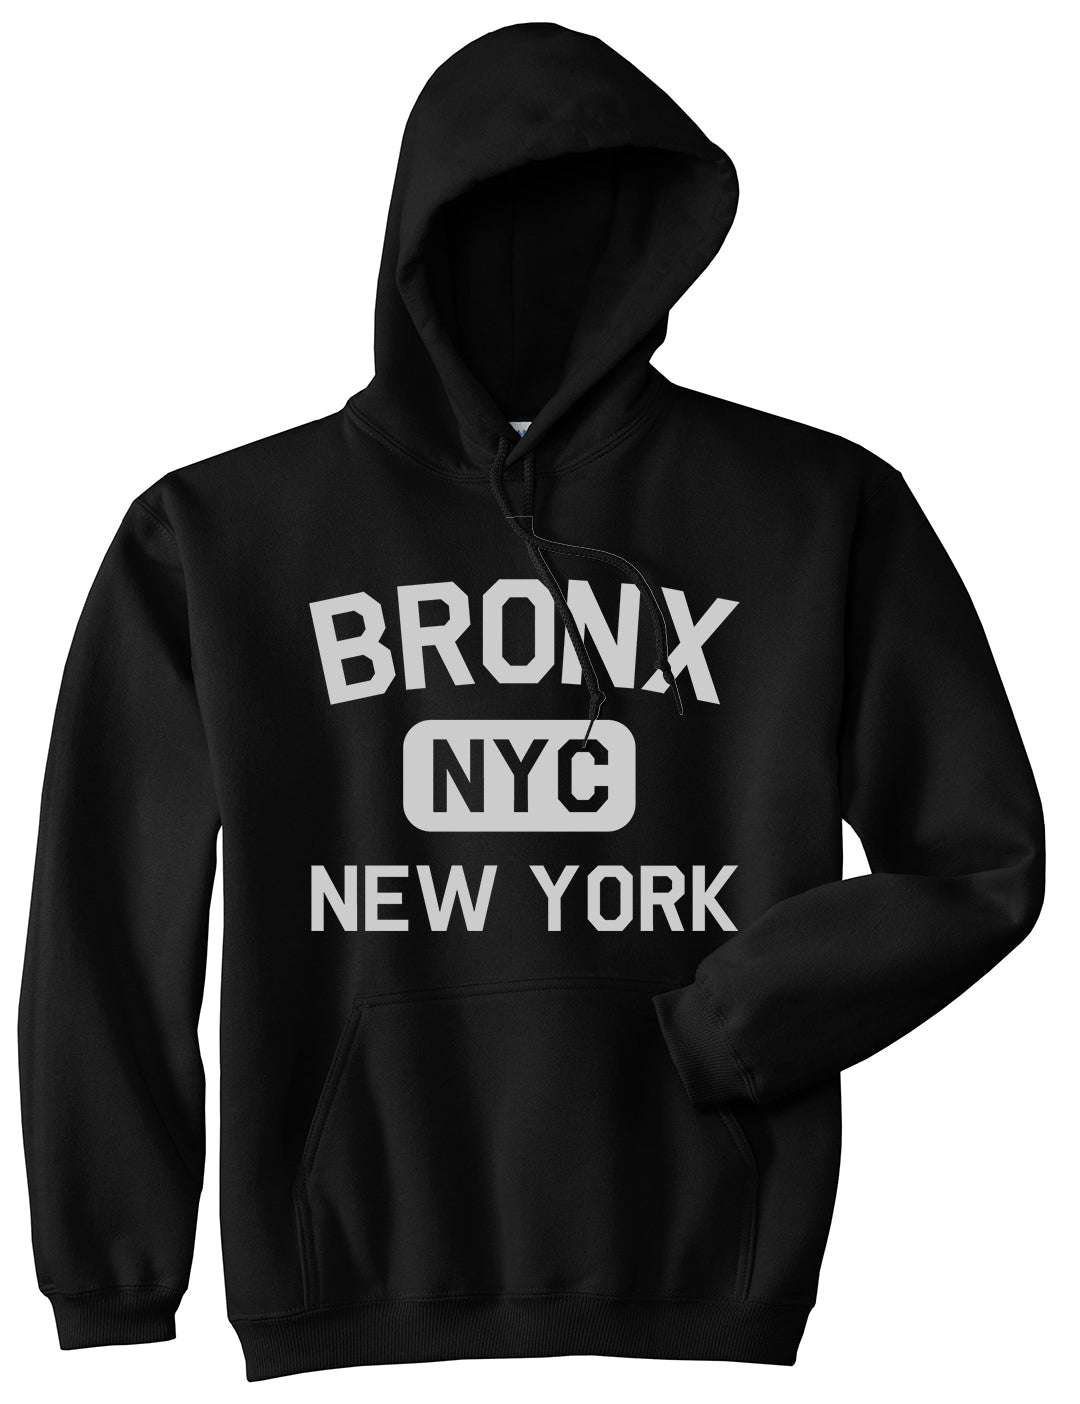 Bronx Gym NYC New York Mens Pullover Hoodie Black